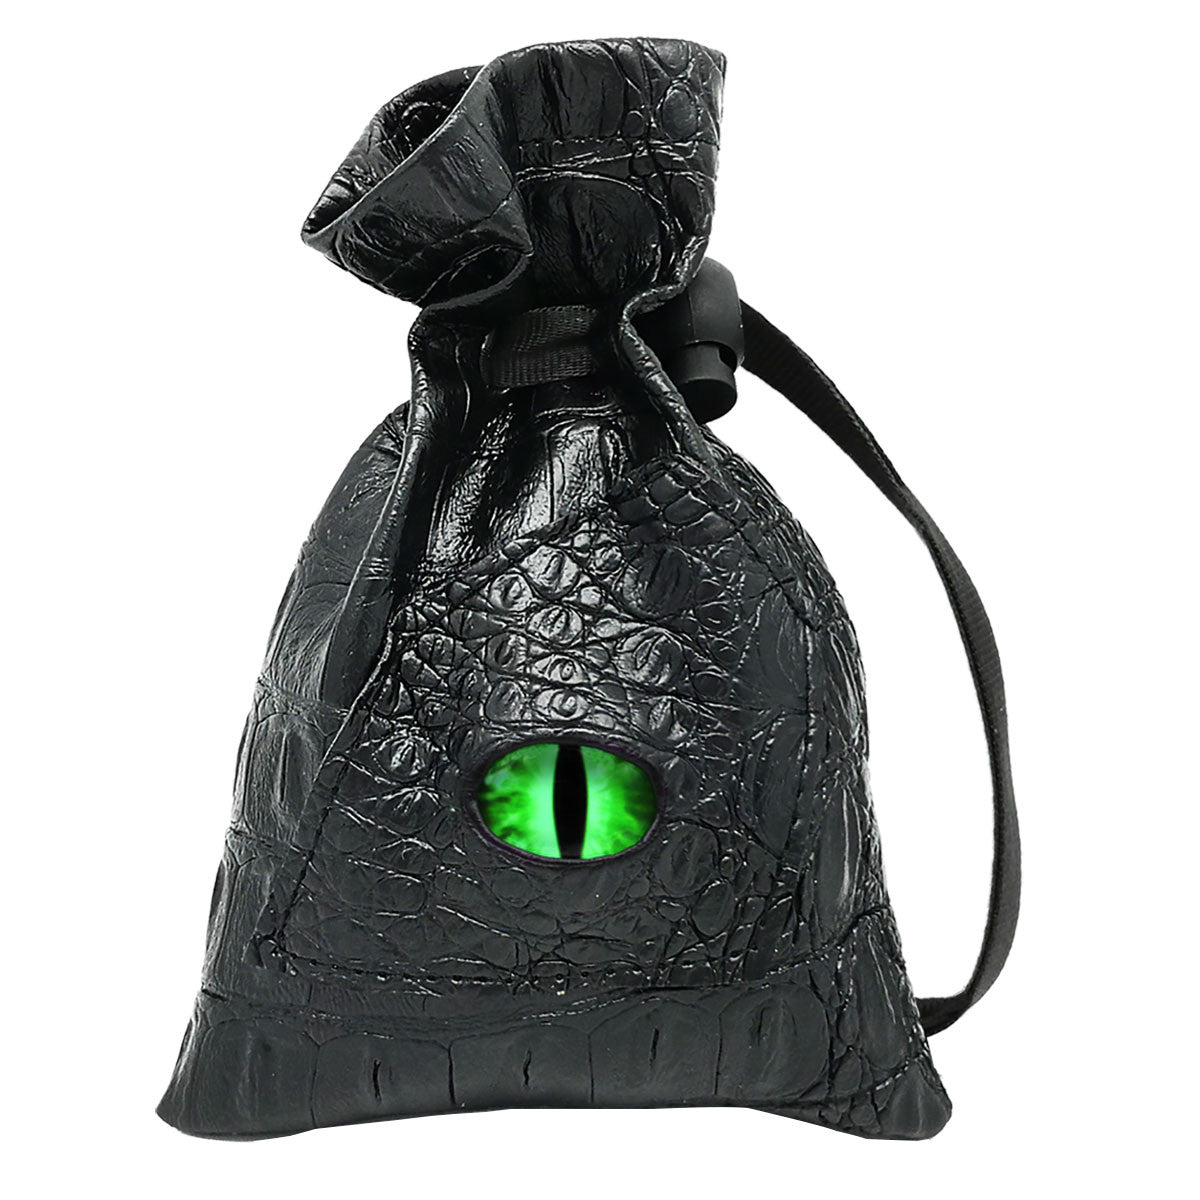 dice bag with green dragon eye